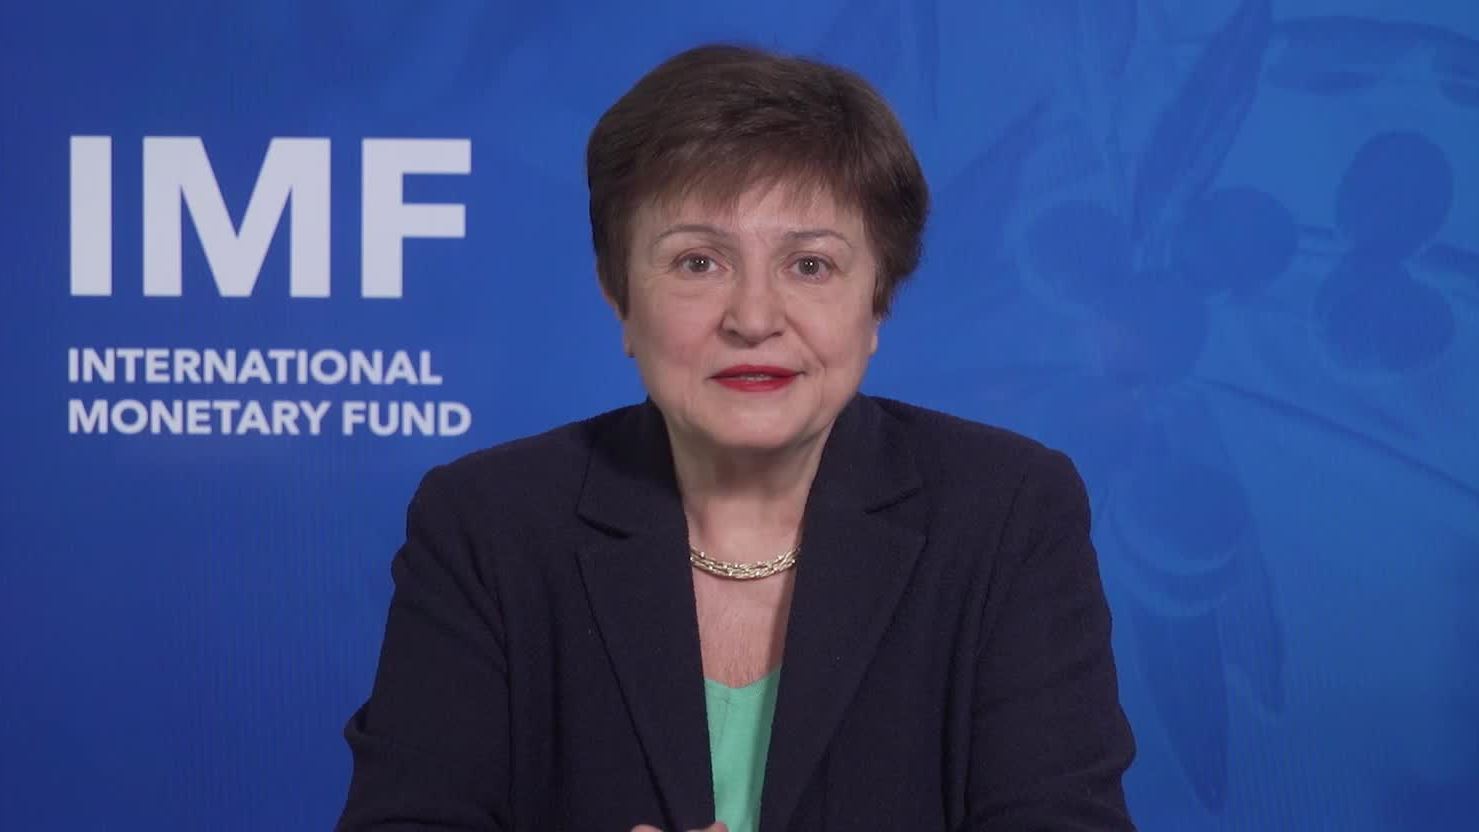 Kristalina Georgieva on IMF’s 2021 Outlook and Priorities